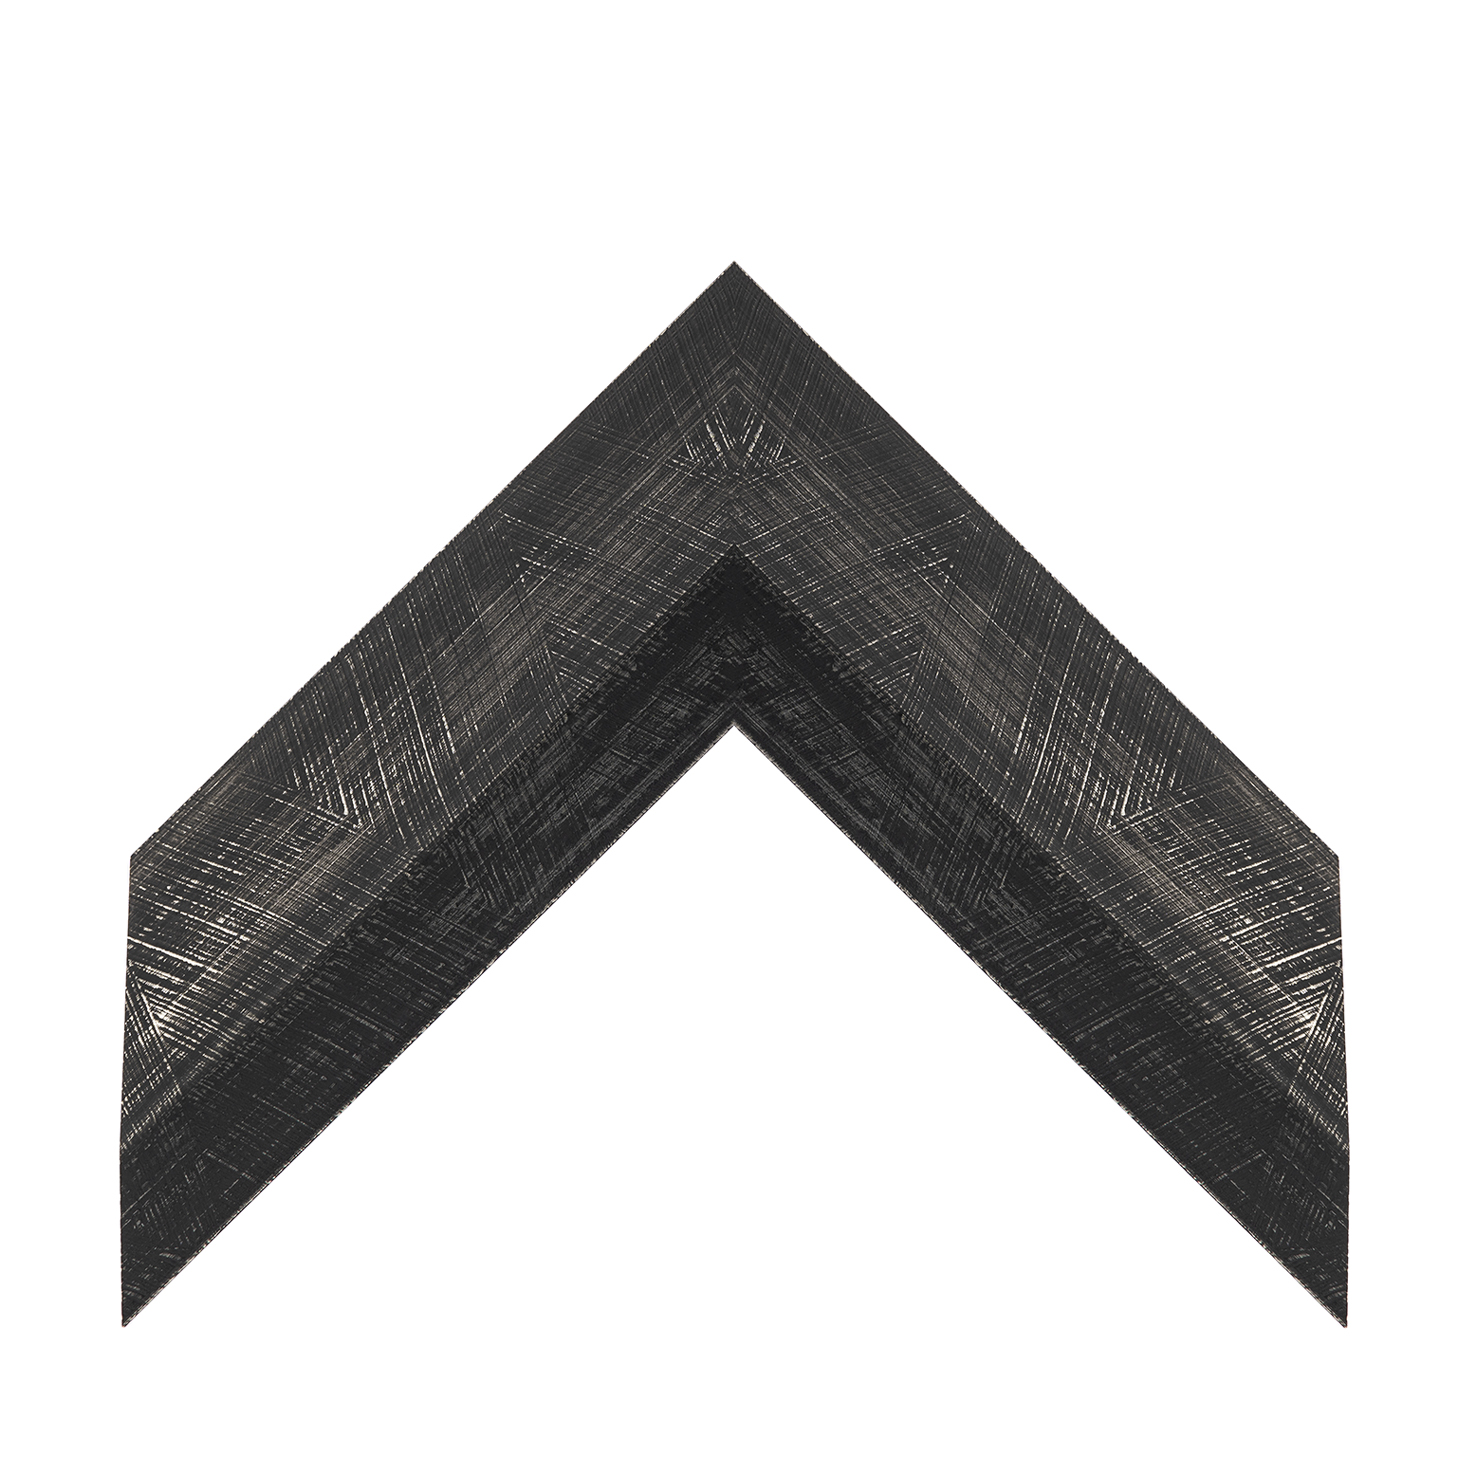 cornice legno ayous sagomata nero antico manuale | Albor